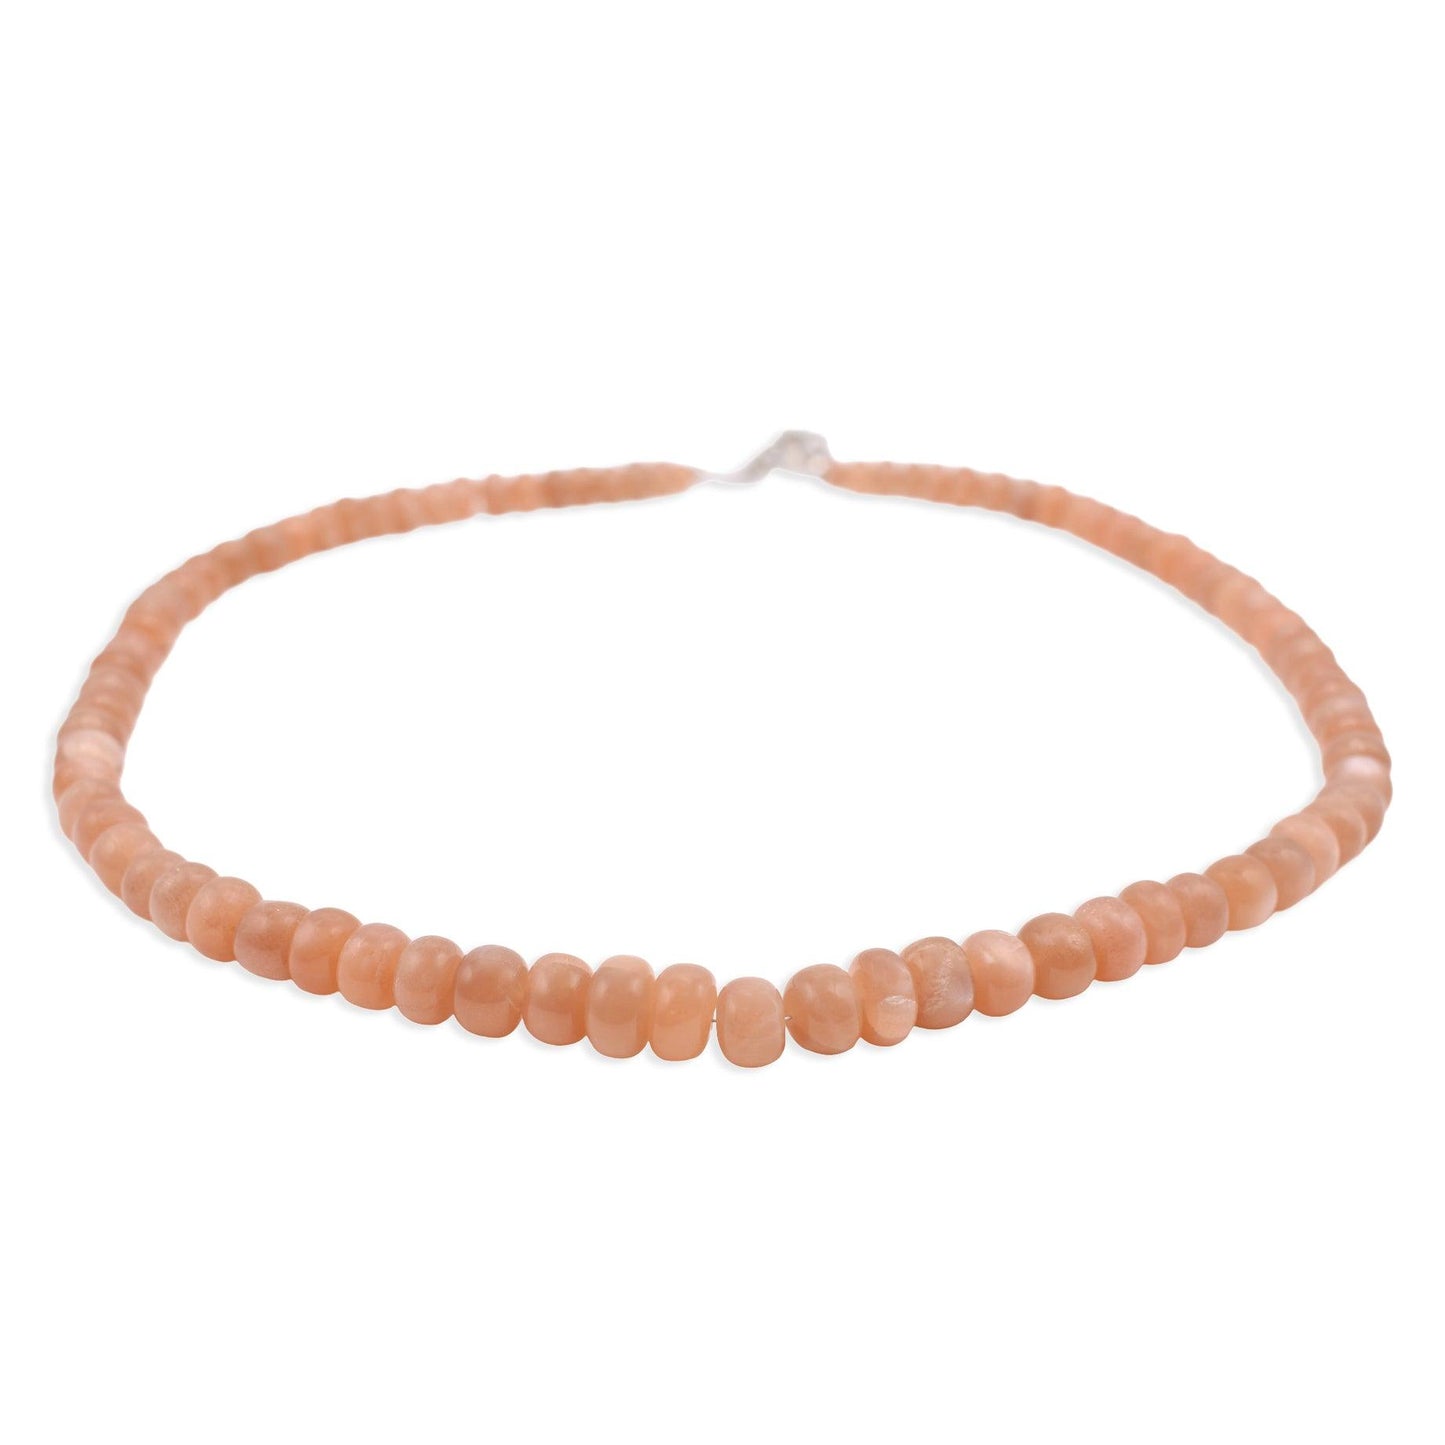 Peach Moonstone Necklace - Mystic Gleam